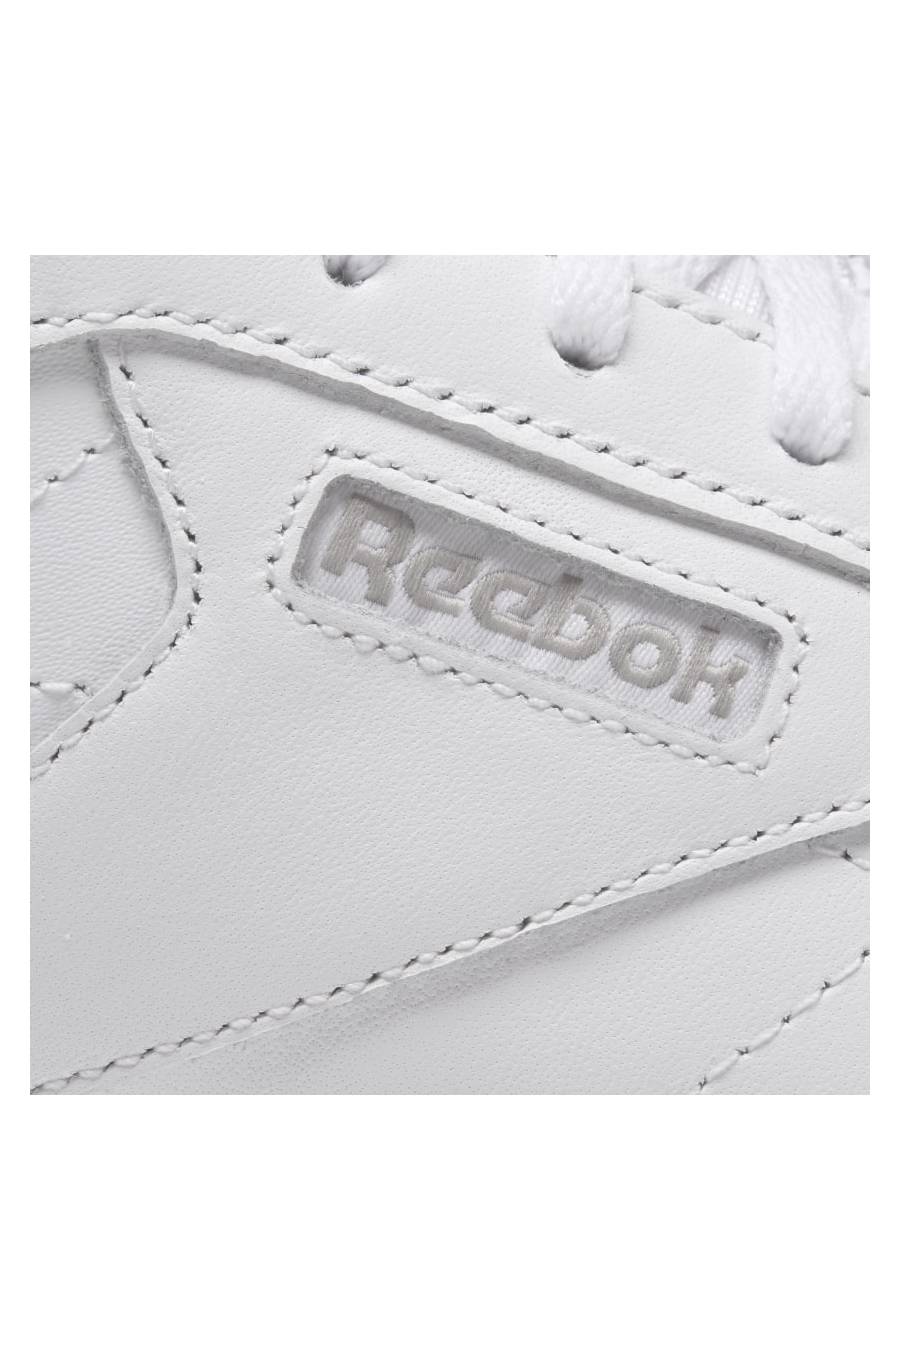 Reebok Royal Glide LX - white - Msdsport by Masdeporte